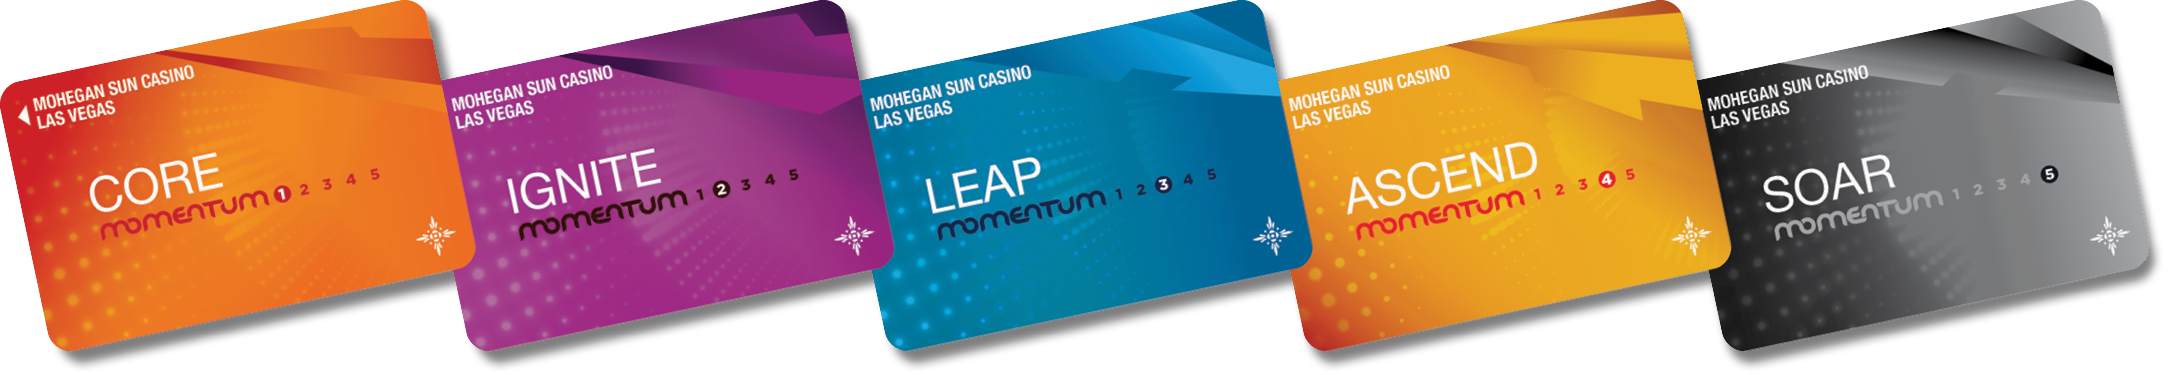 Mohegan Gaming & Entertainment Brings The Award-Winning Momentum Rewards to its New Casino At Virgin Hotels Las Vegas